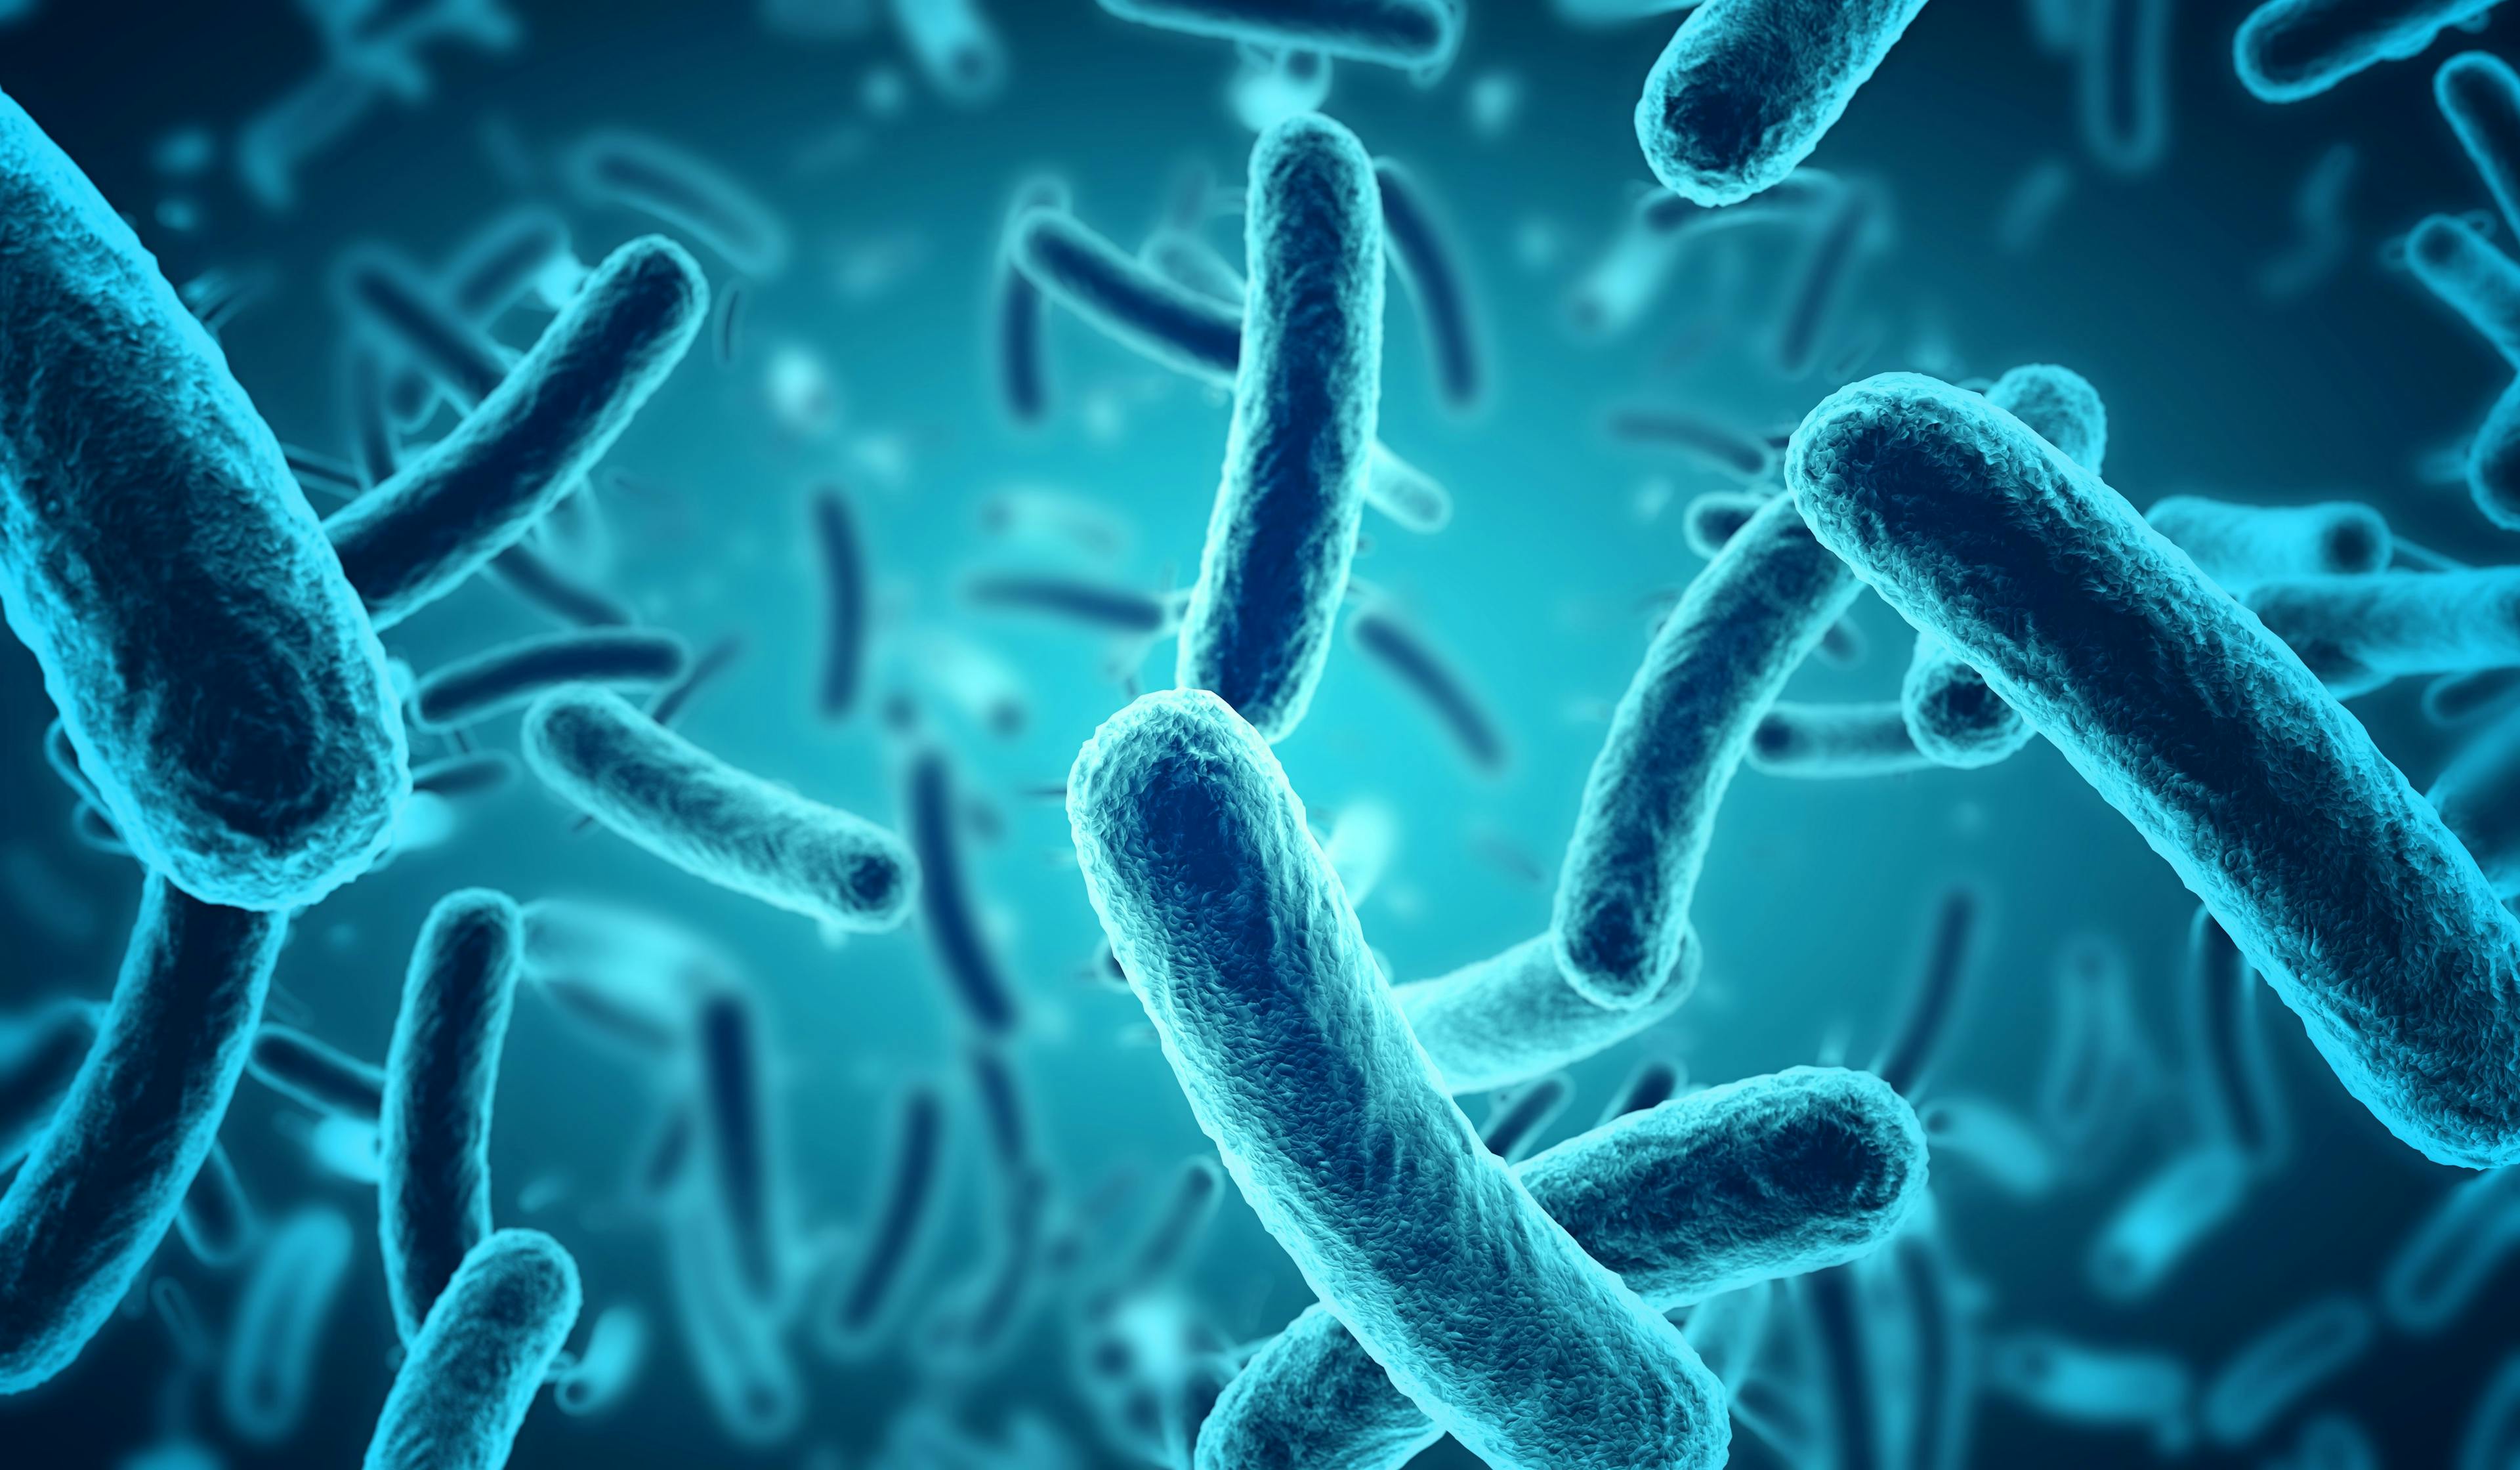 Close up of 3d microscopic blue bacteria | Image Credit: © Paulista - stock.adobe.com